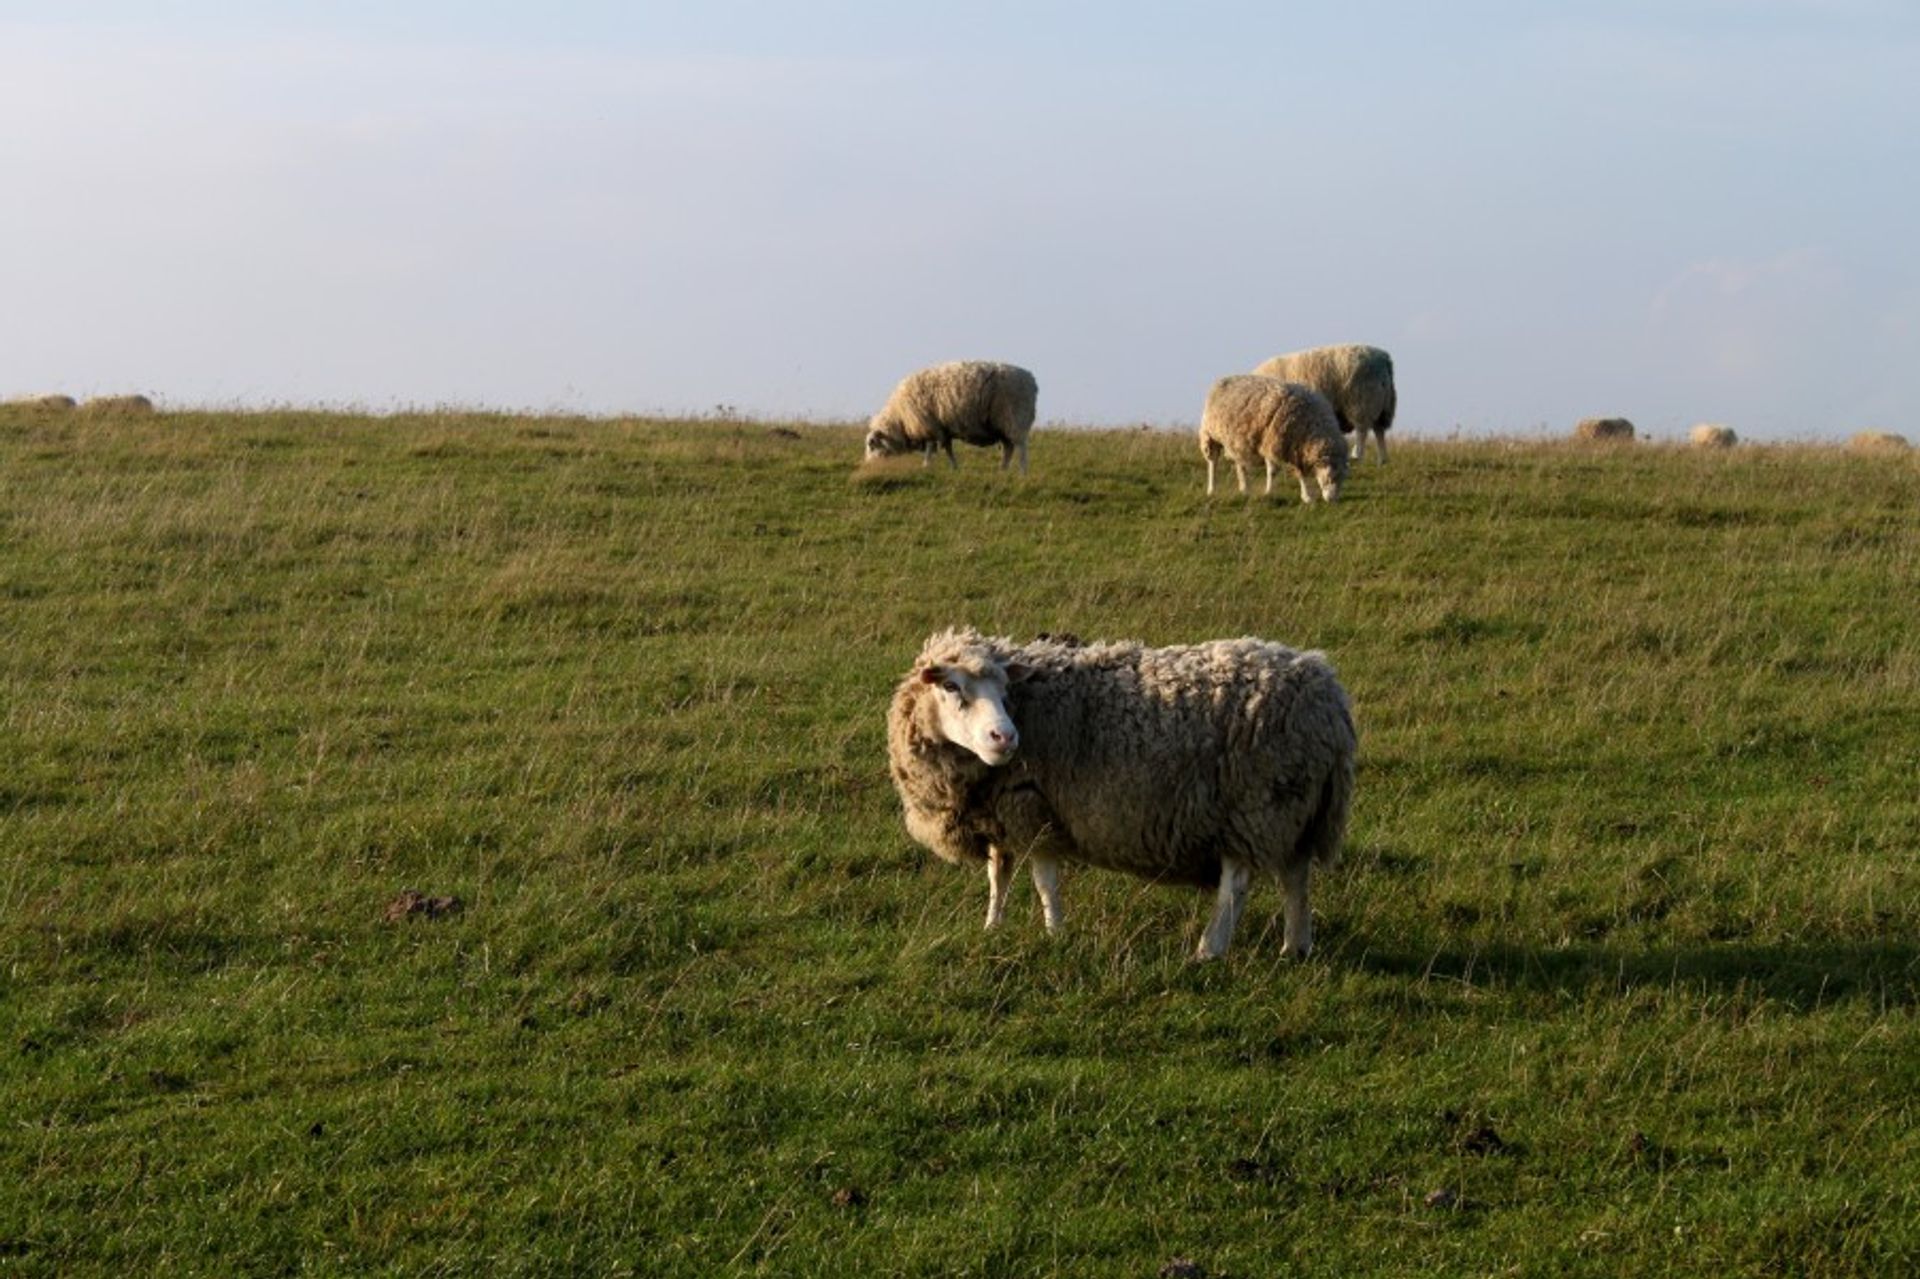 The sheep enjoying the view.